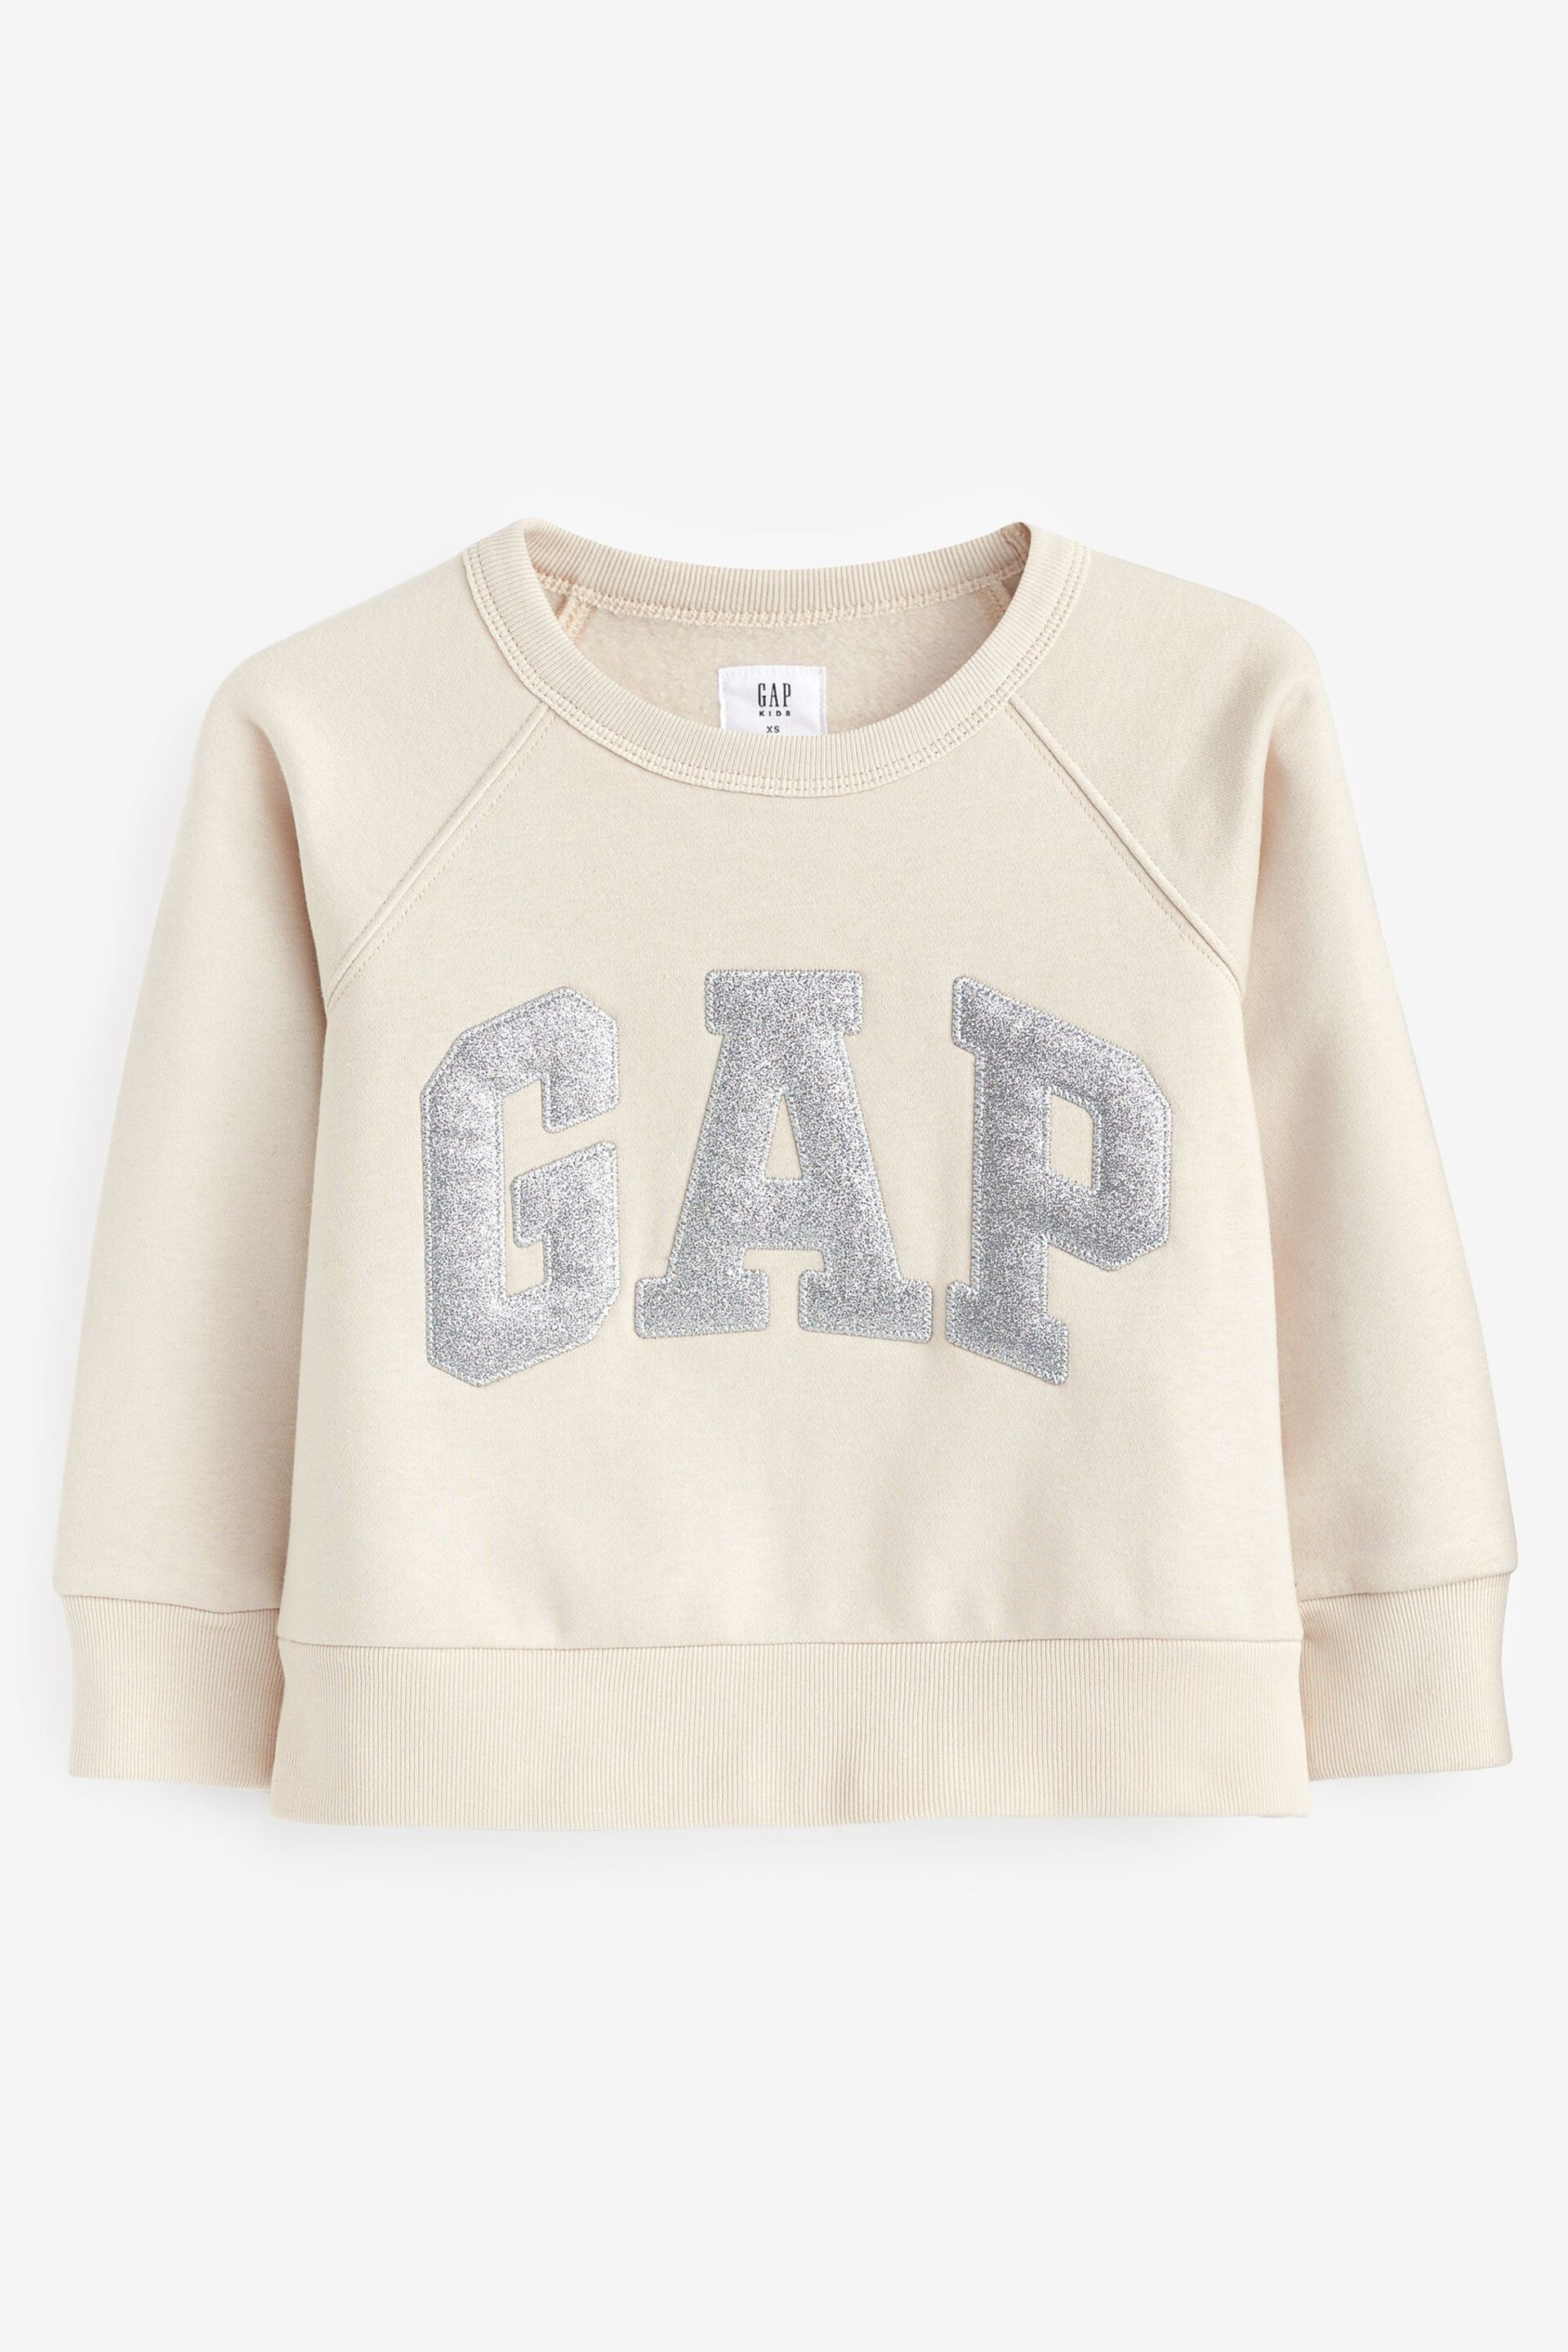 Gap Cream Glitter Logo Crew Neck Sweatshirt - Image 1 of 3